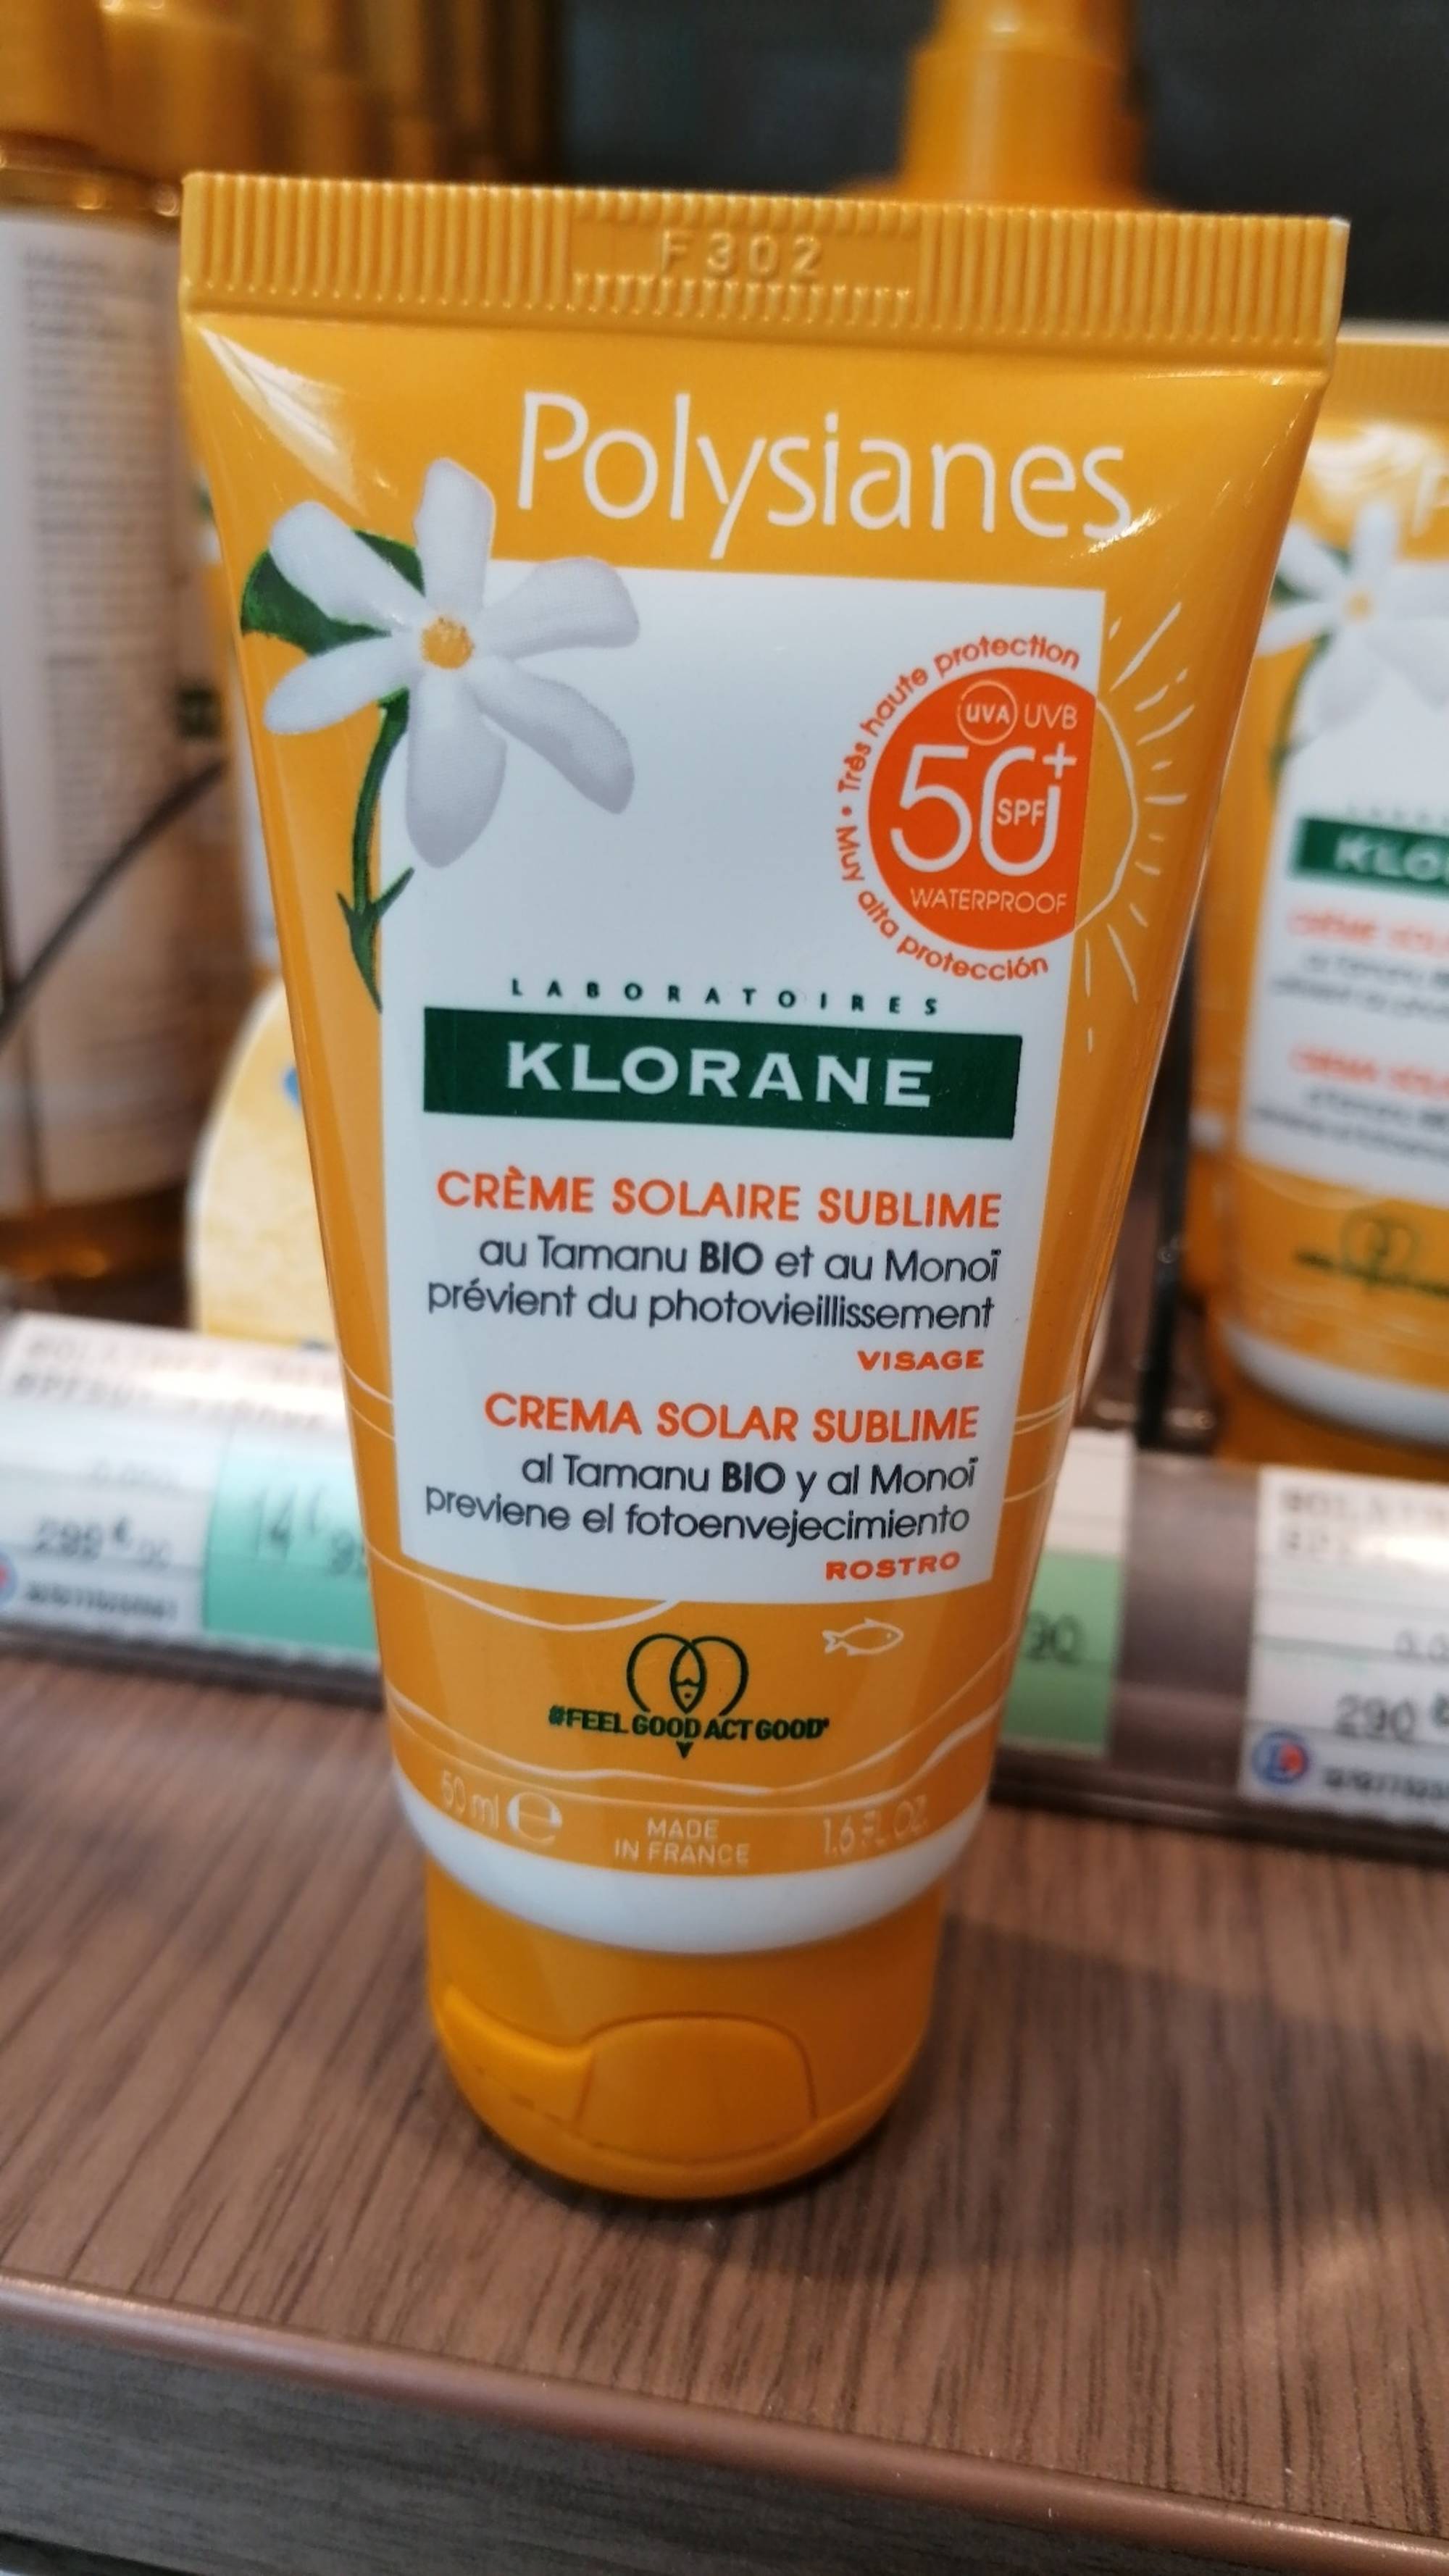 KLORANE - Polysianes - Crème solaire sublime SPF 50+